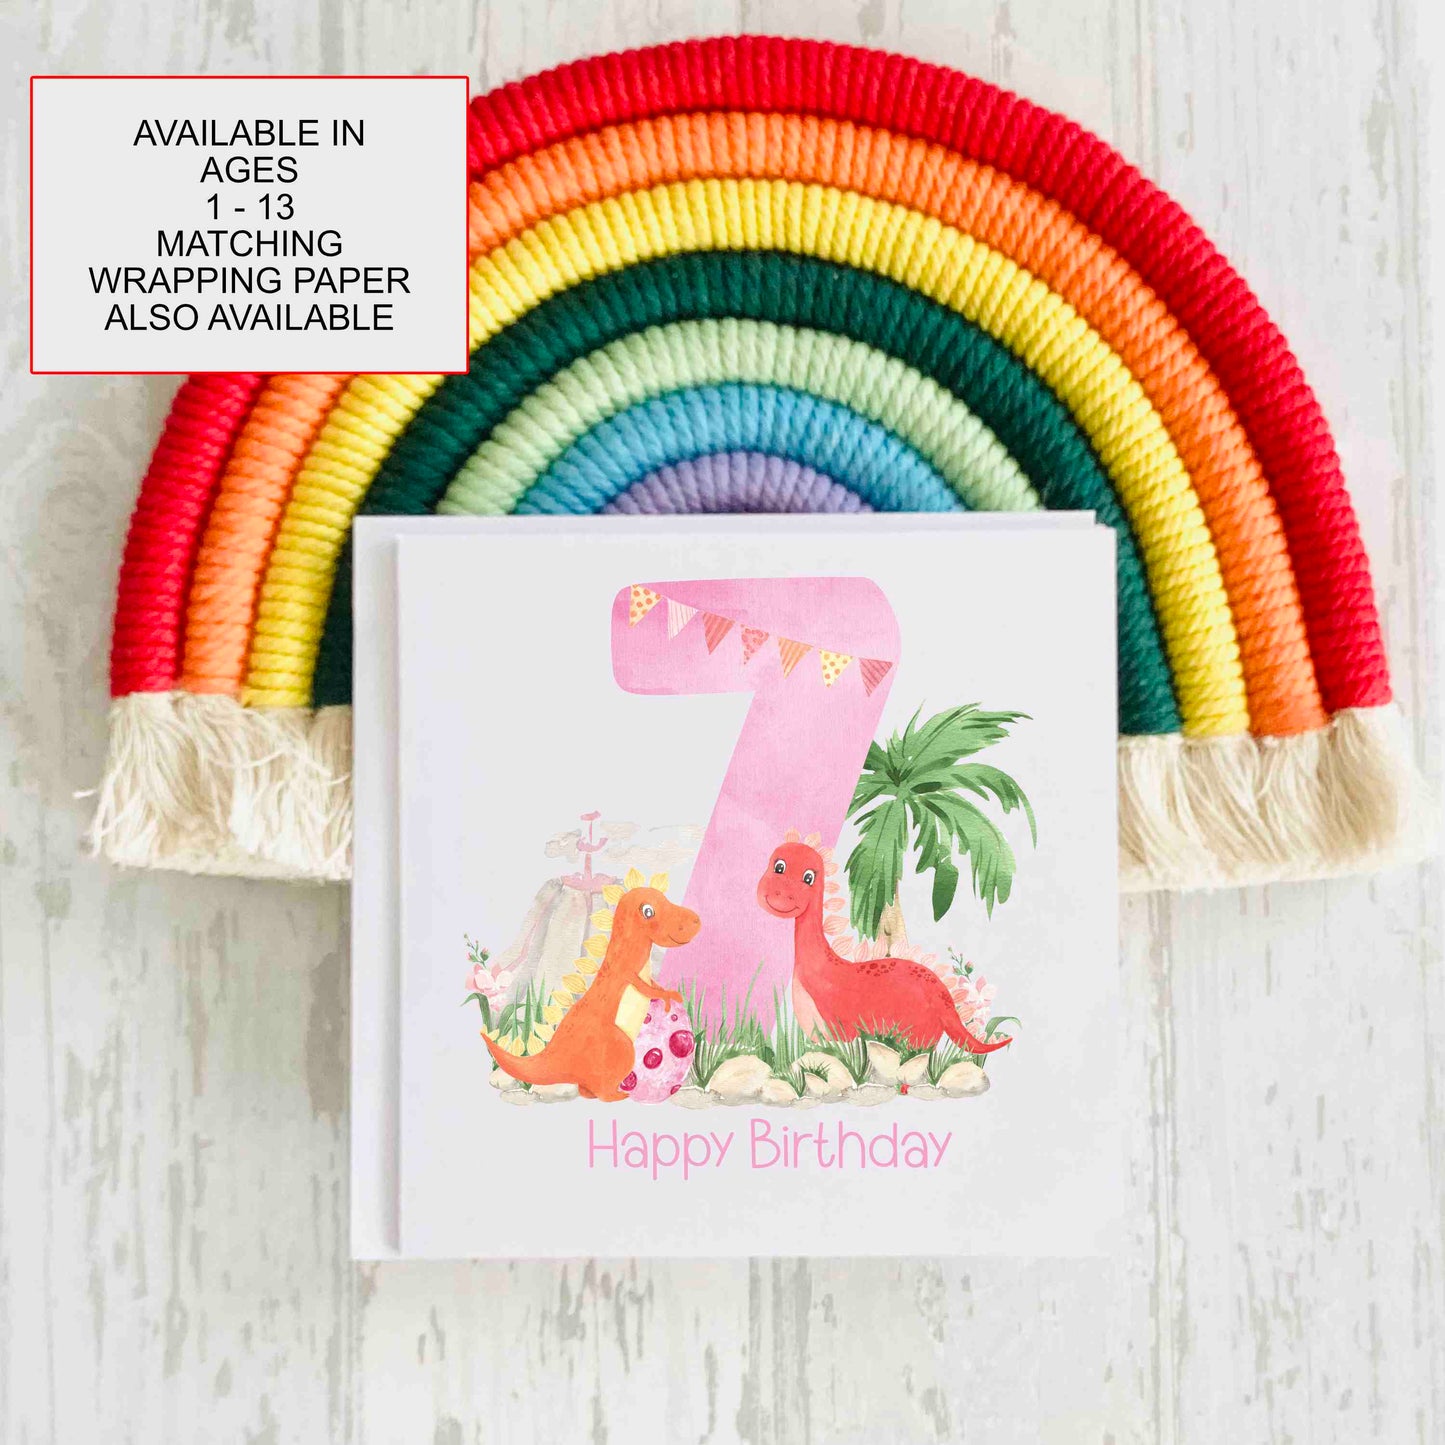 Pink Dinosaur Themed Birthday Card - Ages 1-13